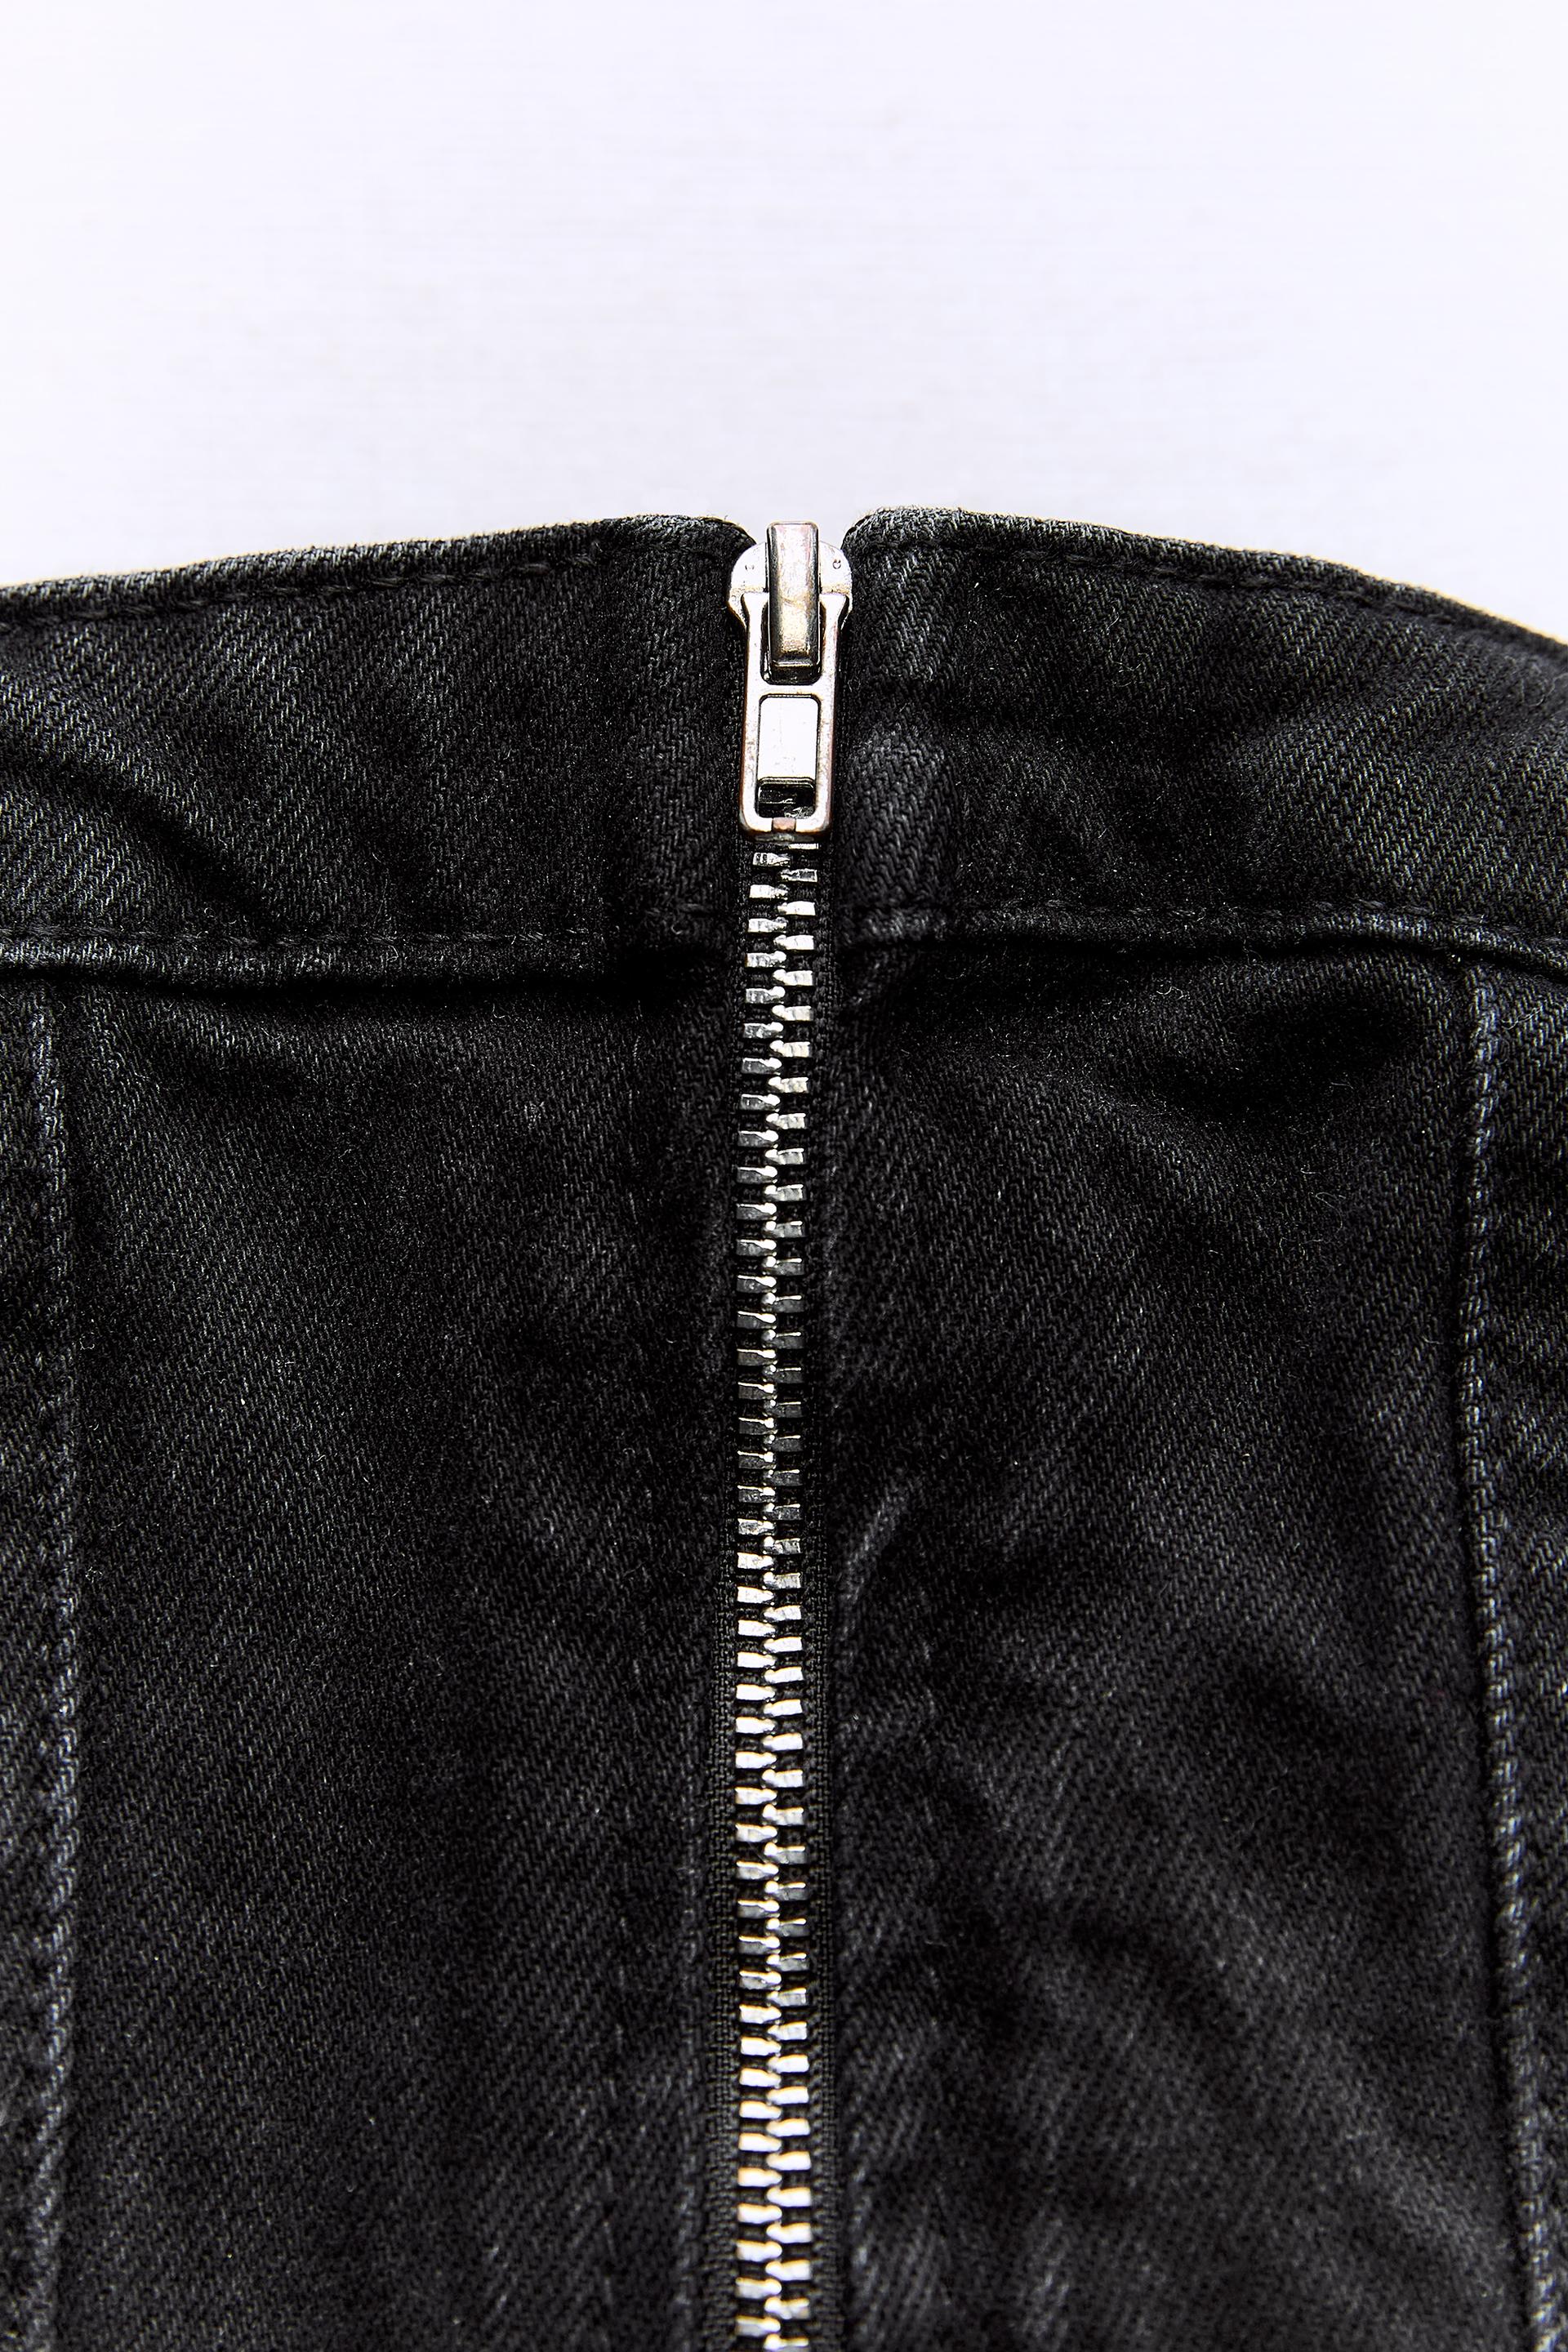 Zara Black Corset Cropped Tank Top🖤 Zipper on the - Depop